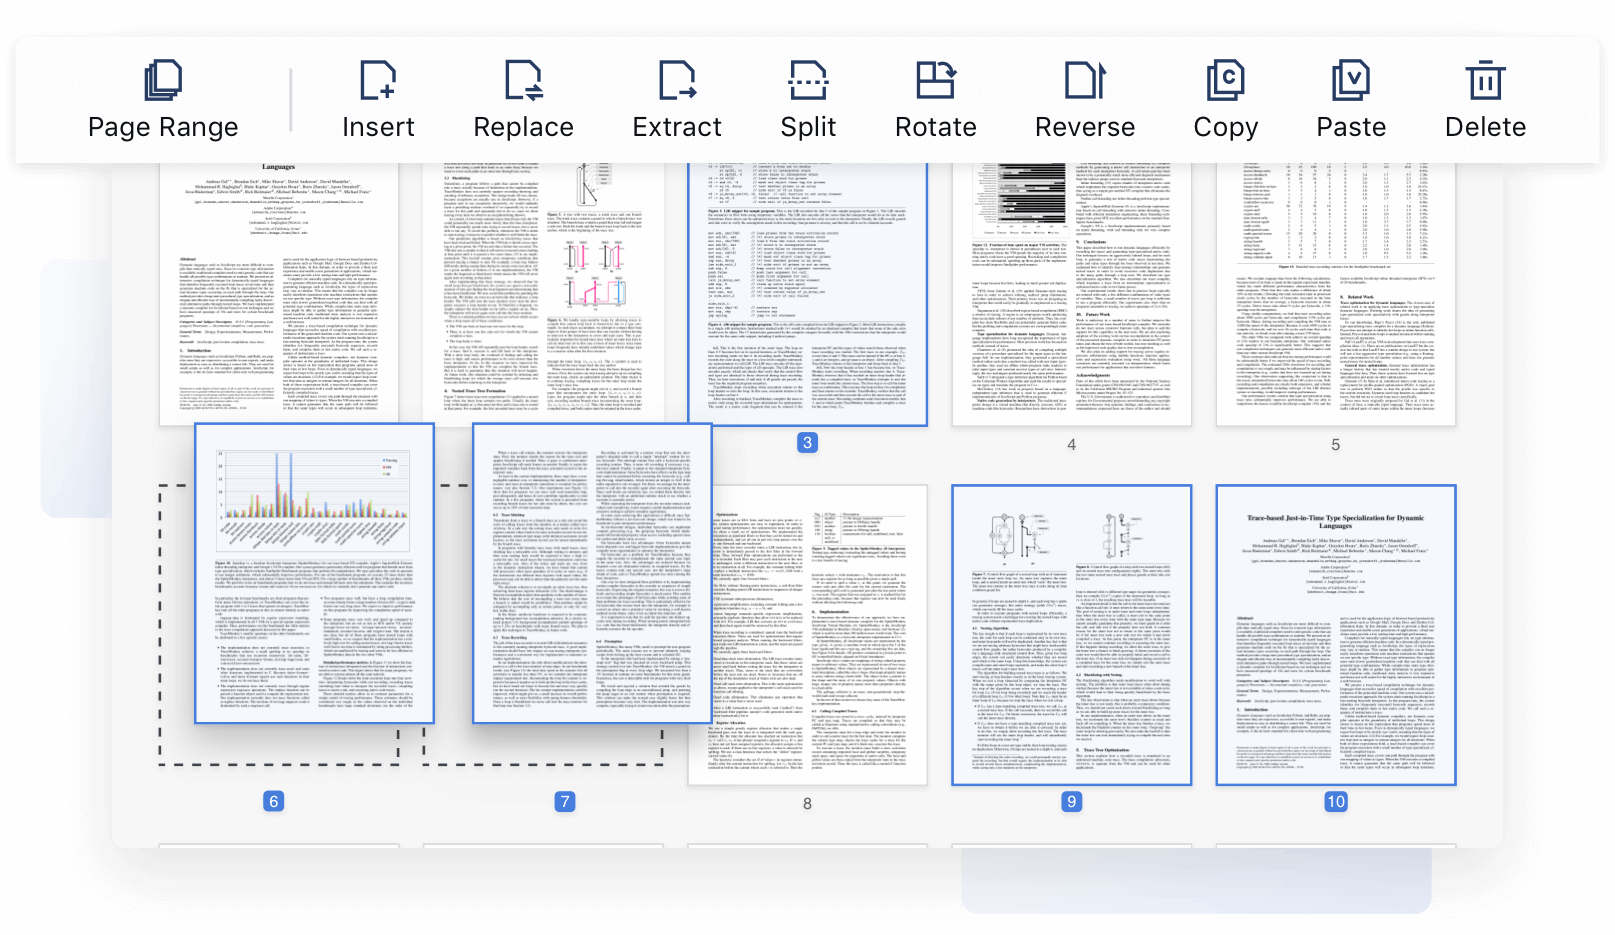 mac edit pdf transparent